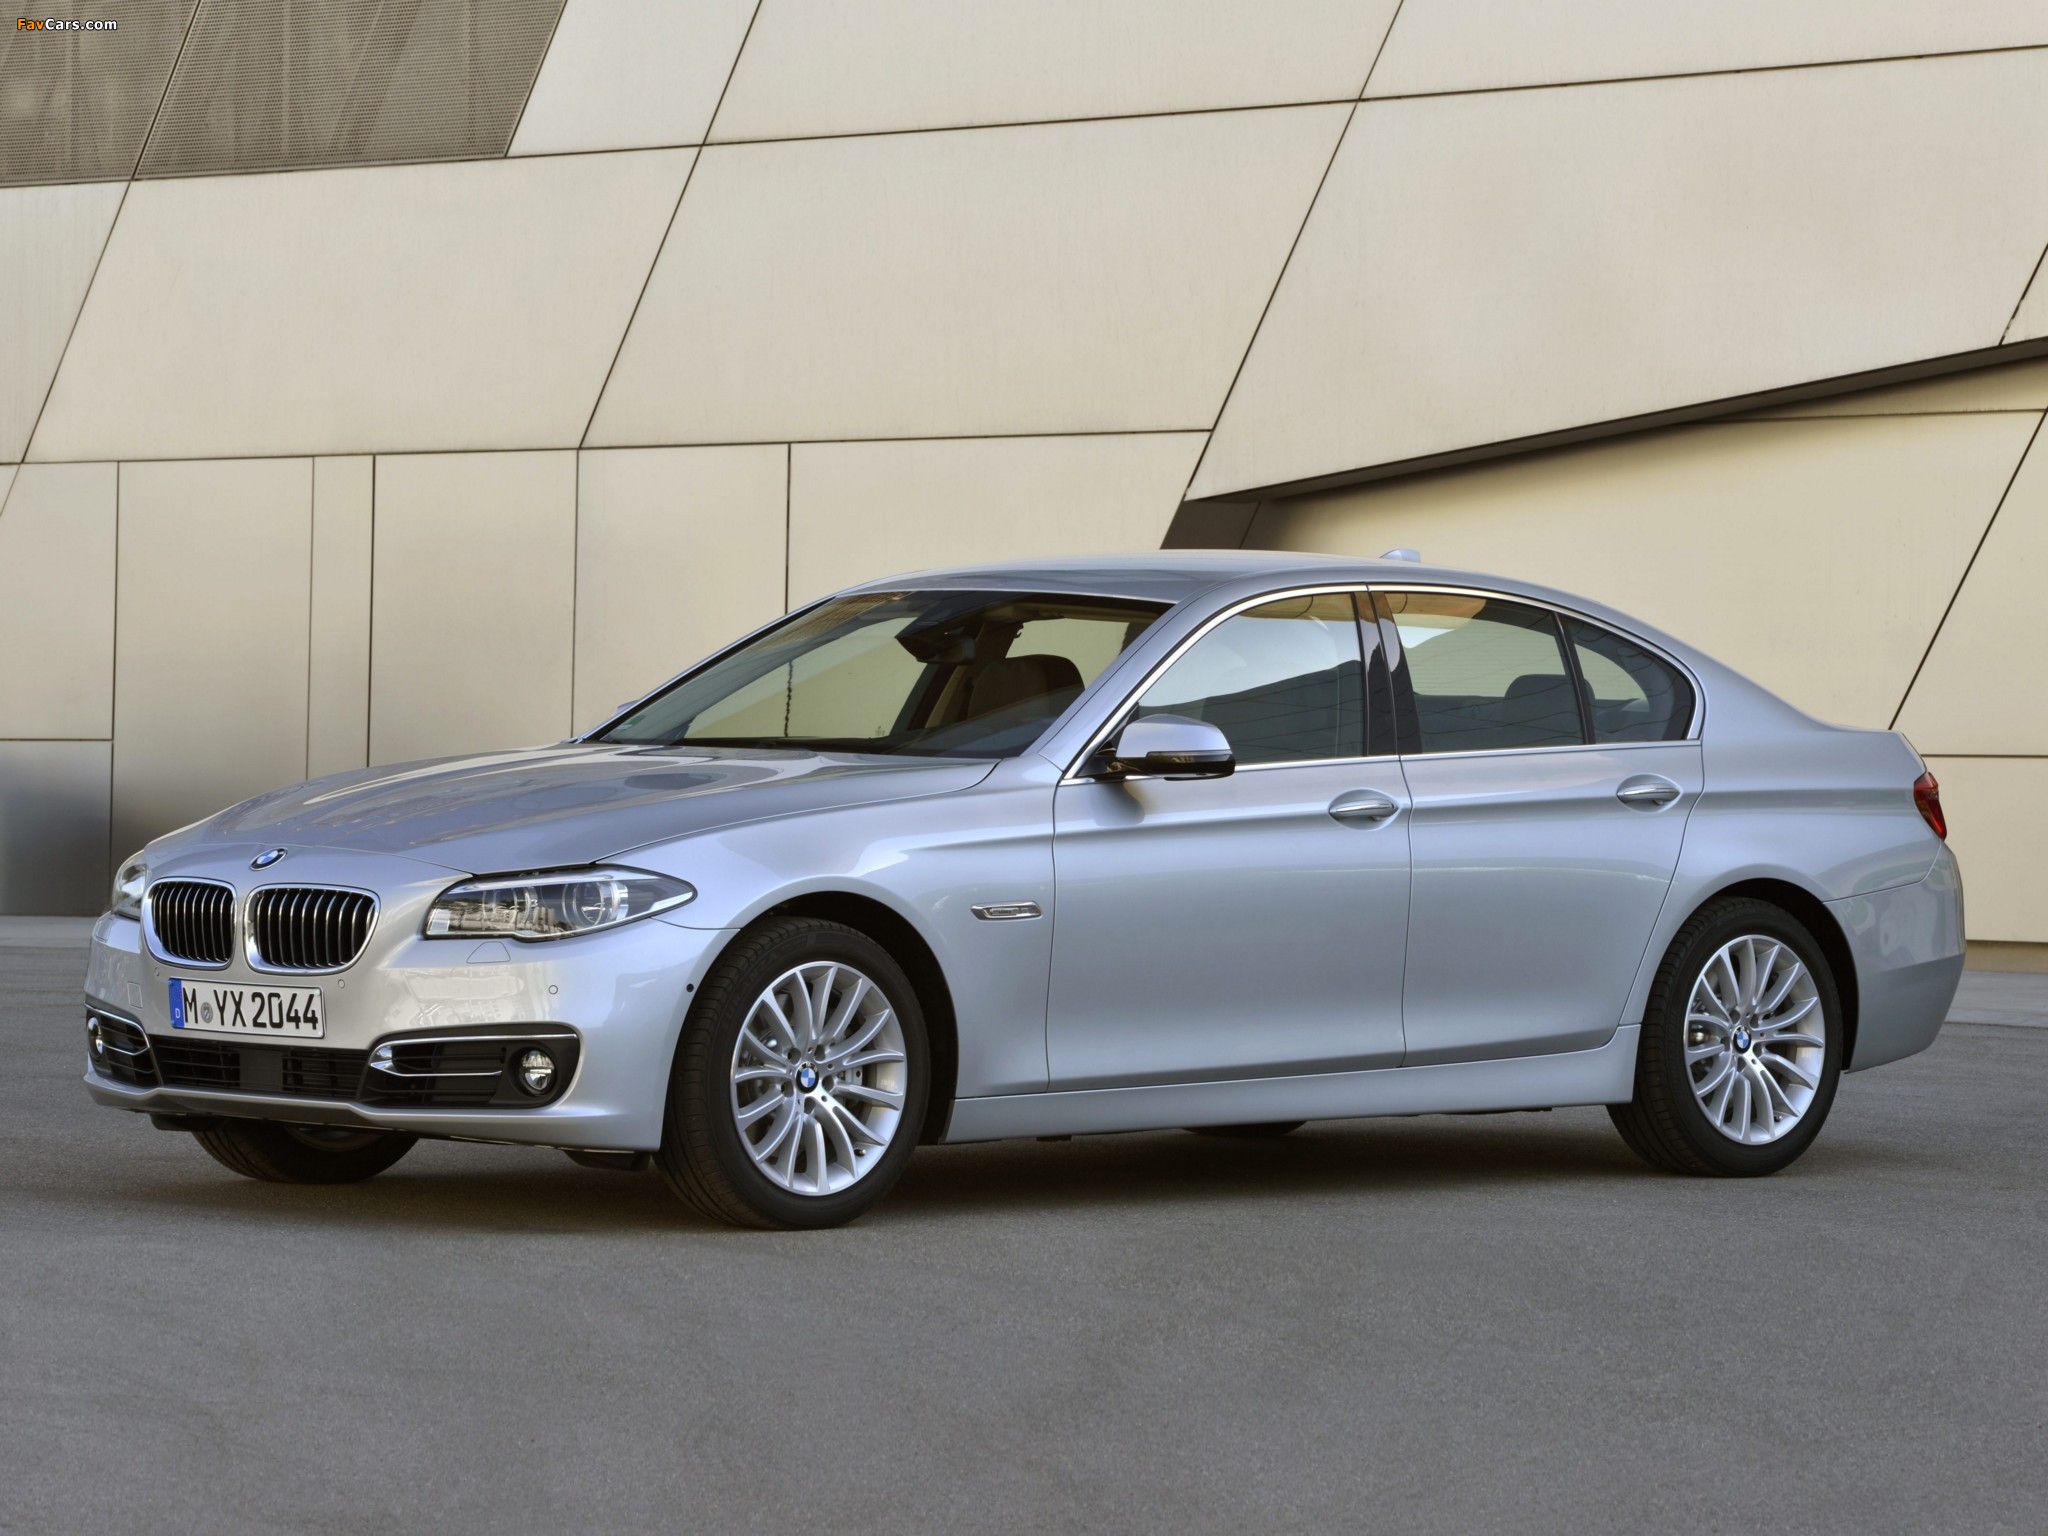 BMW 530d Sedan Luxury Line (F10) 2013 photos (2048 x 1536)